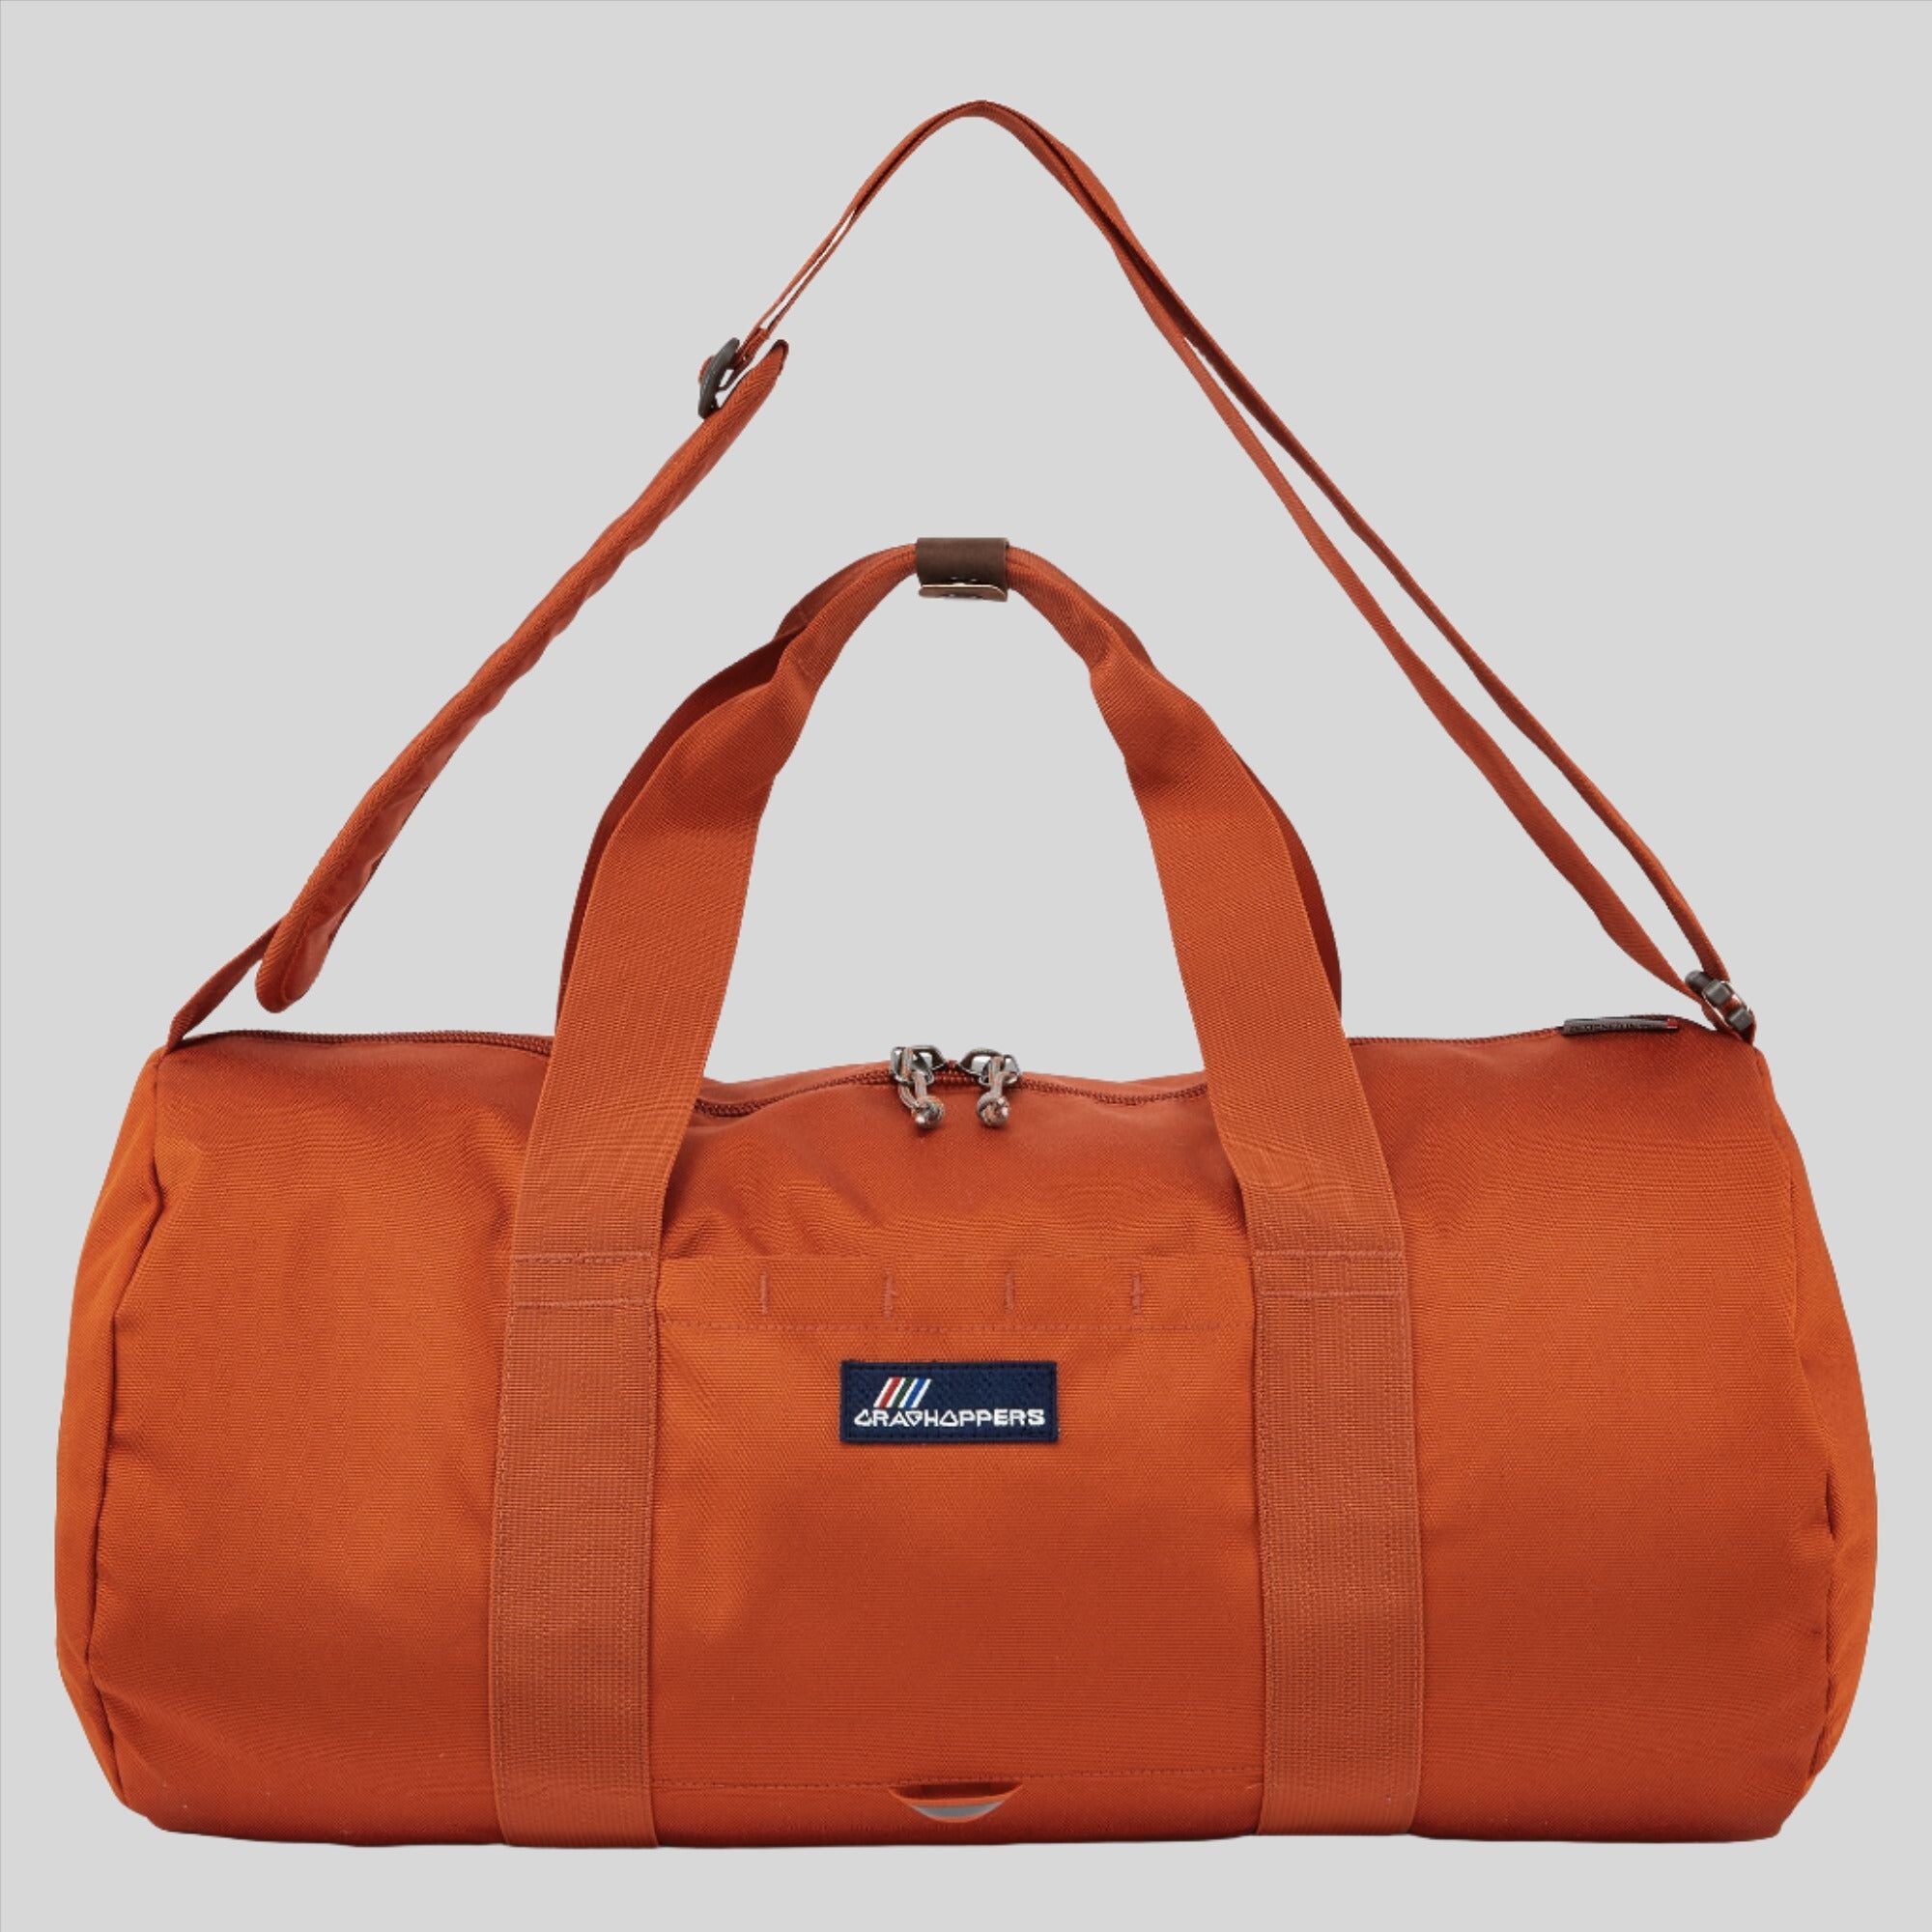 40L Kiwi Classic Duffle Bag | Potters Clay